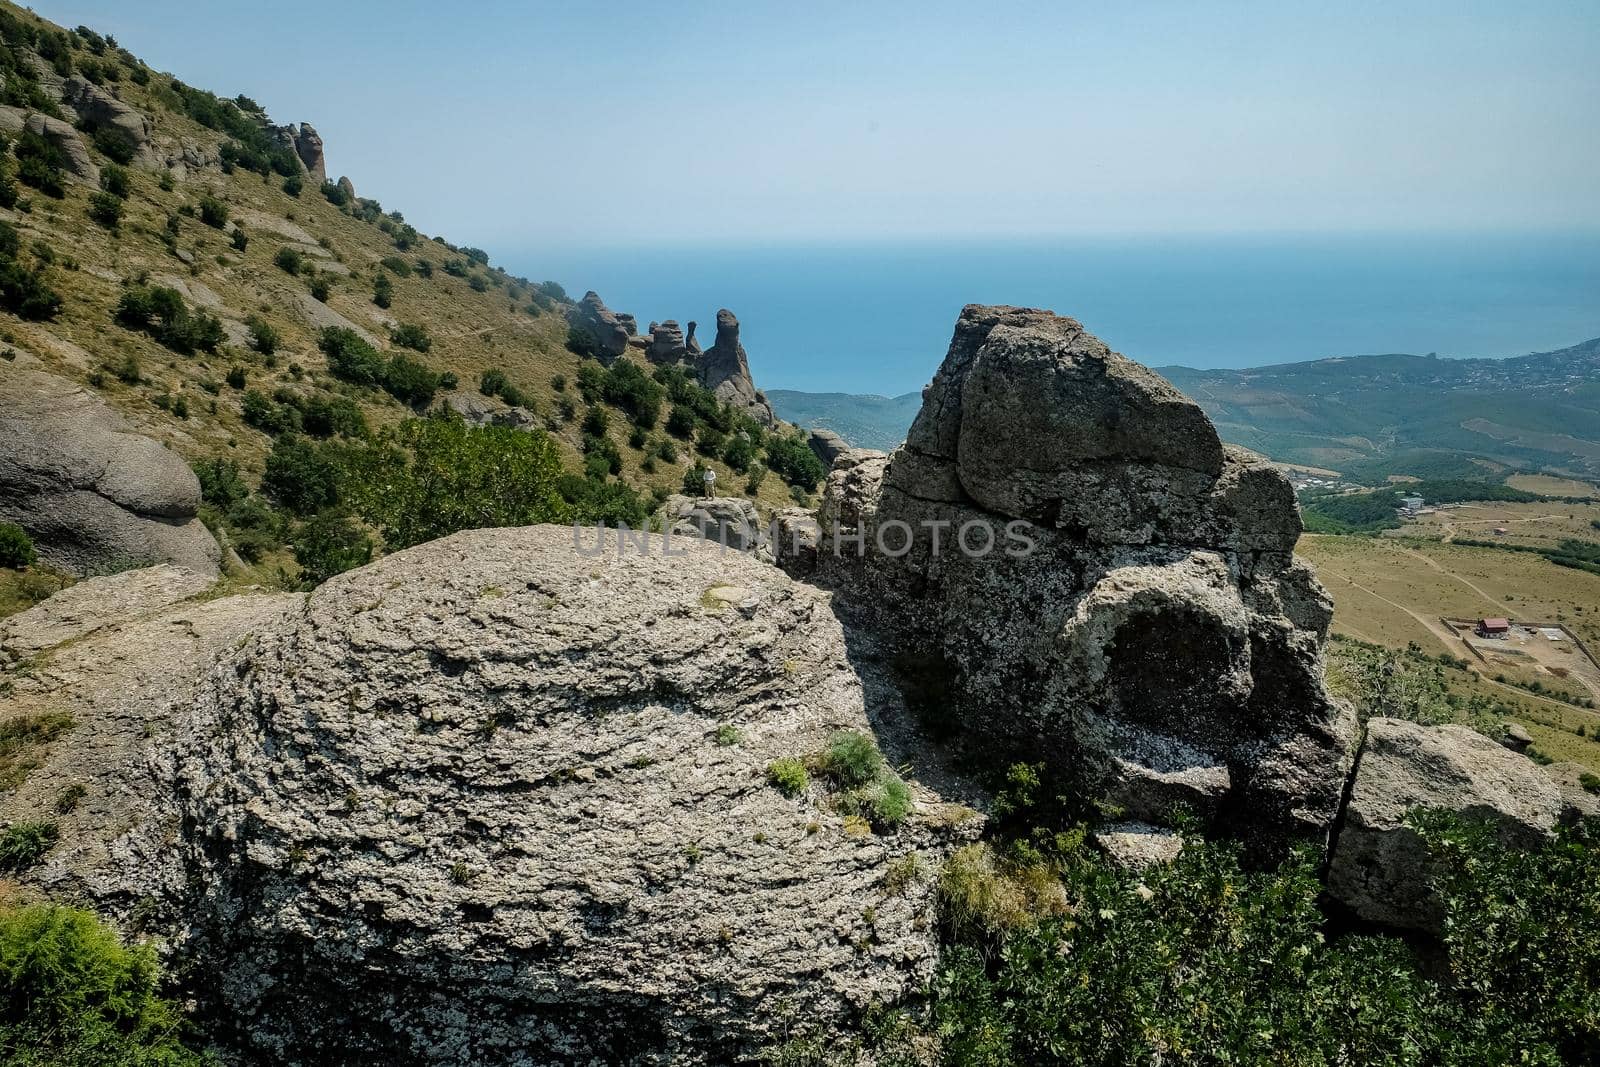 Rocks of the Demerdzhi mountain range in the Crimea.